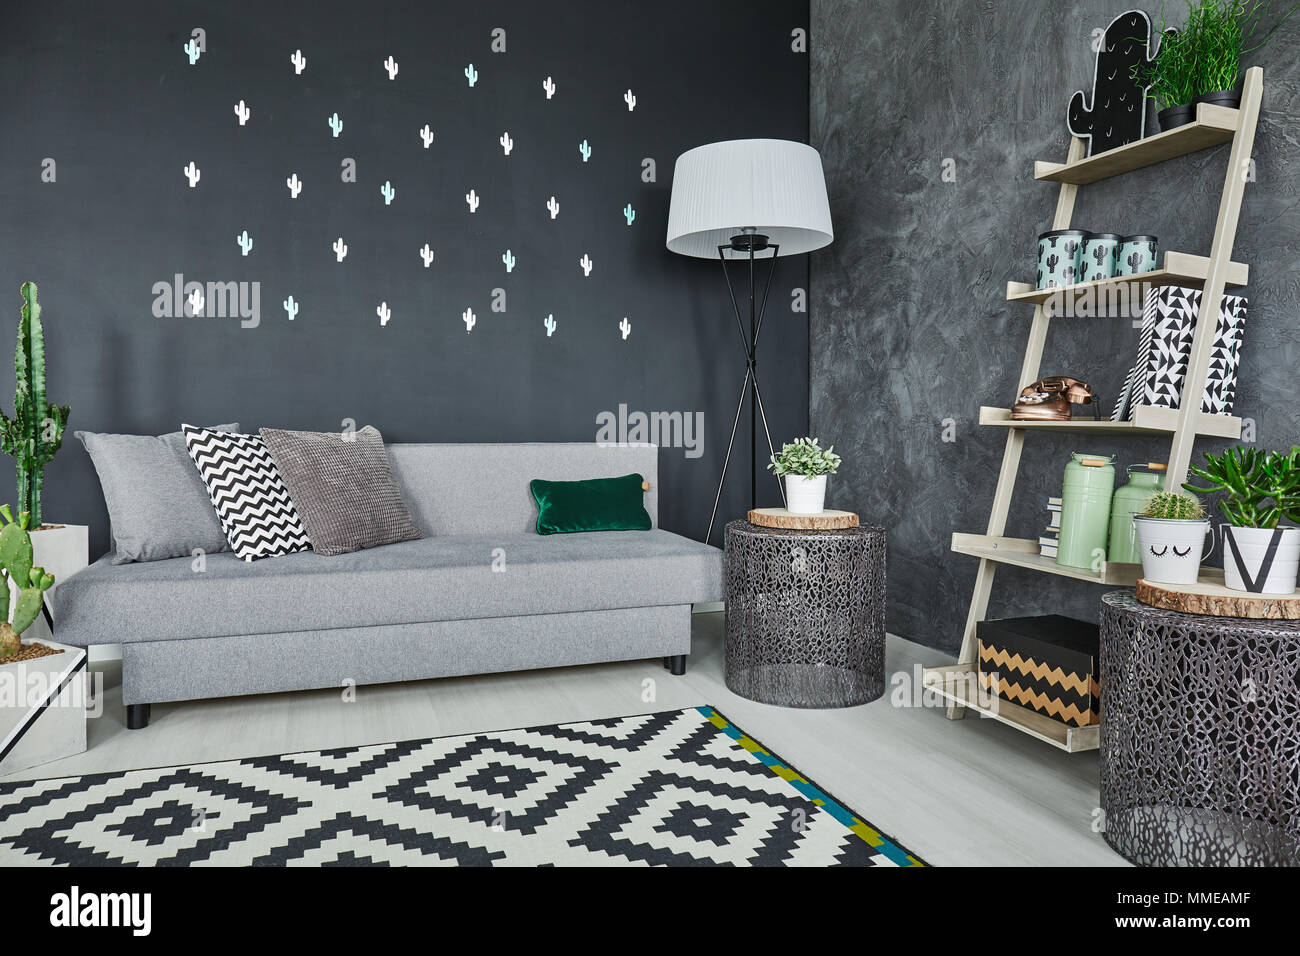 Room with black cactus wall decor and sofa Stock Photo - Alamy